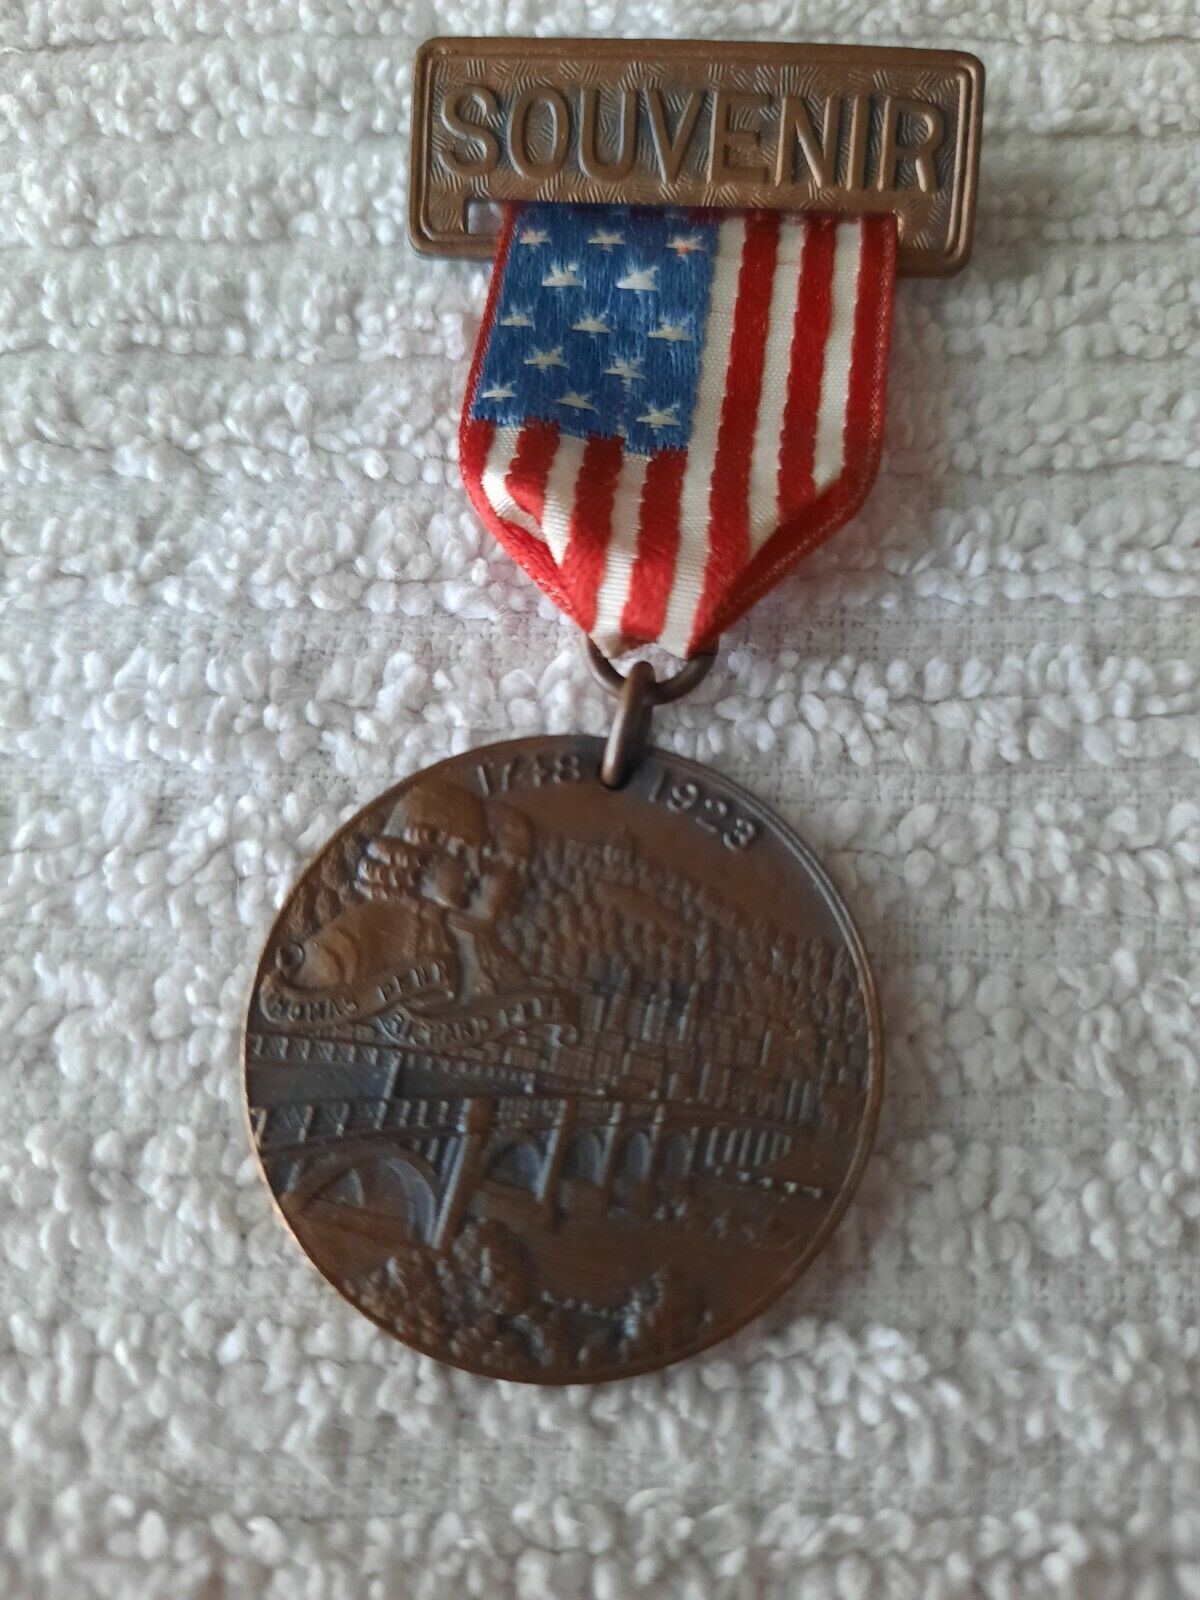 1923 souvenir ribbon & medal READING, PA 175th anniversary BERKS COUNTY, PA